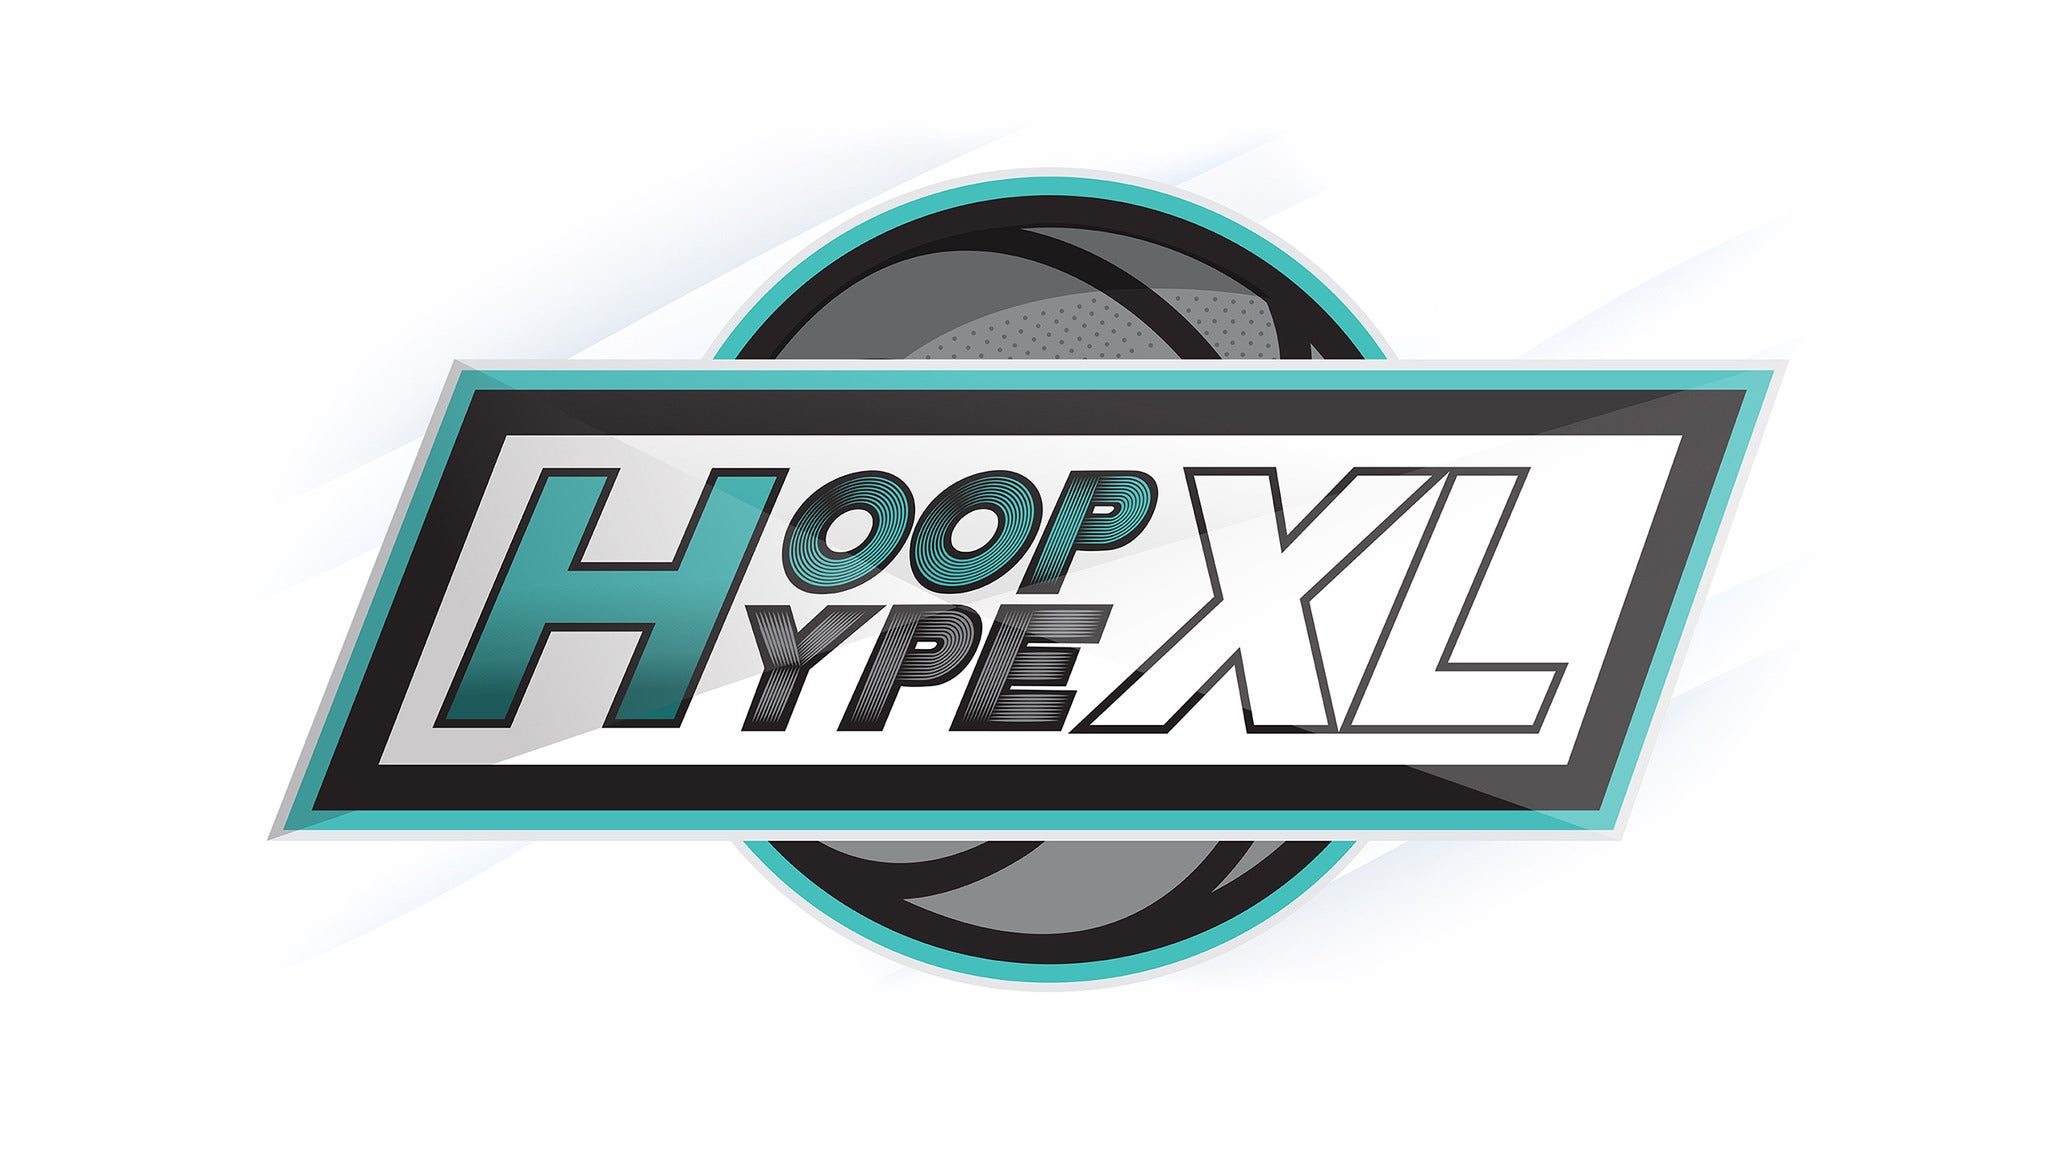 Hoop Hype XL | College Basketball Showcase presale information on freepresalepasswords.com